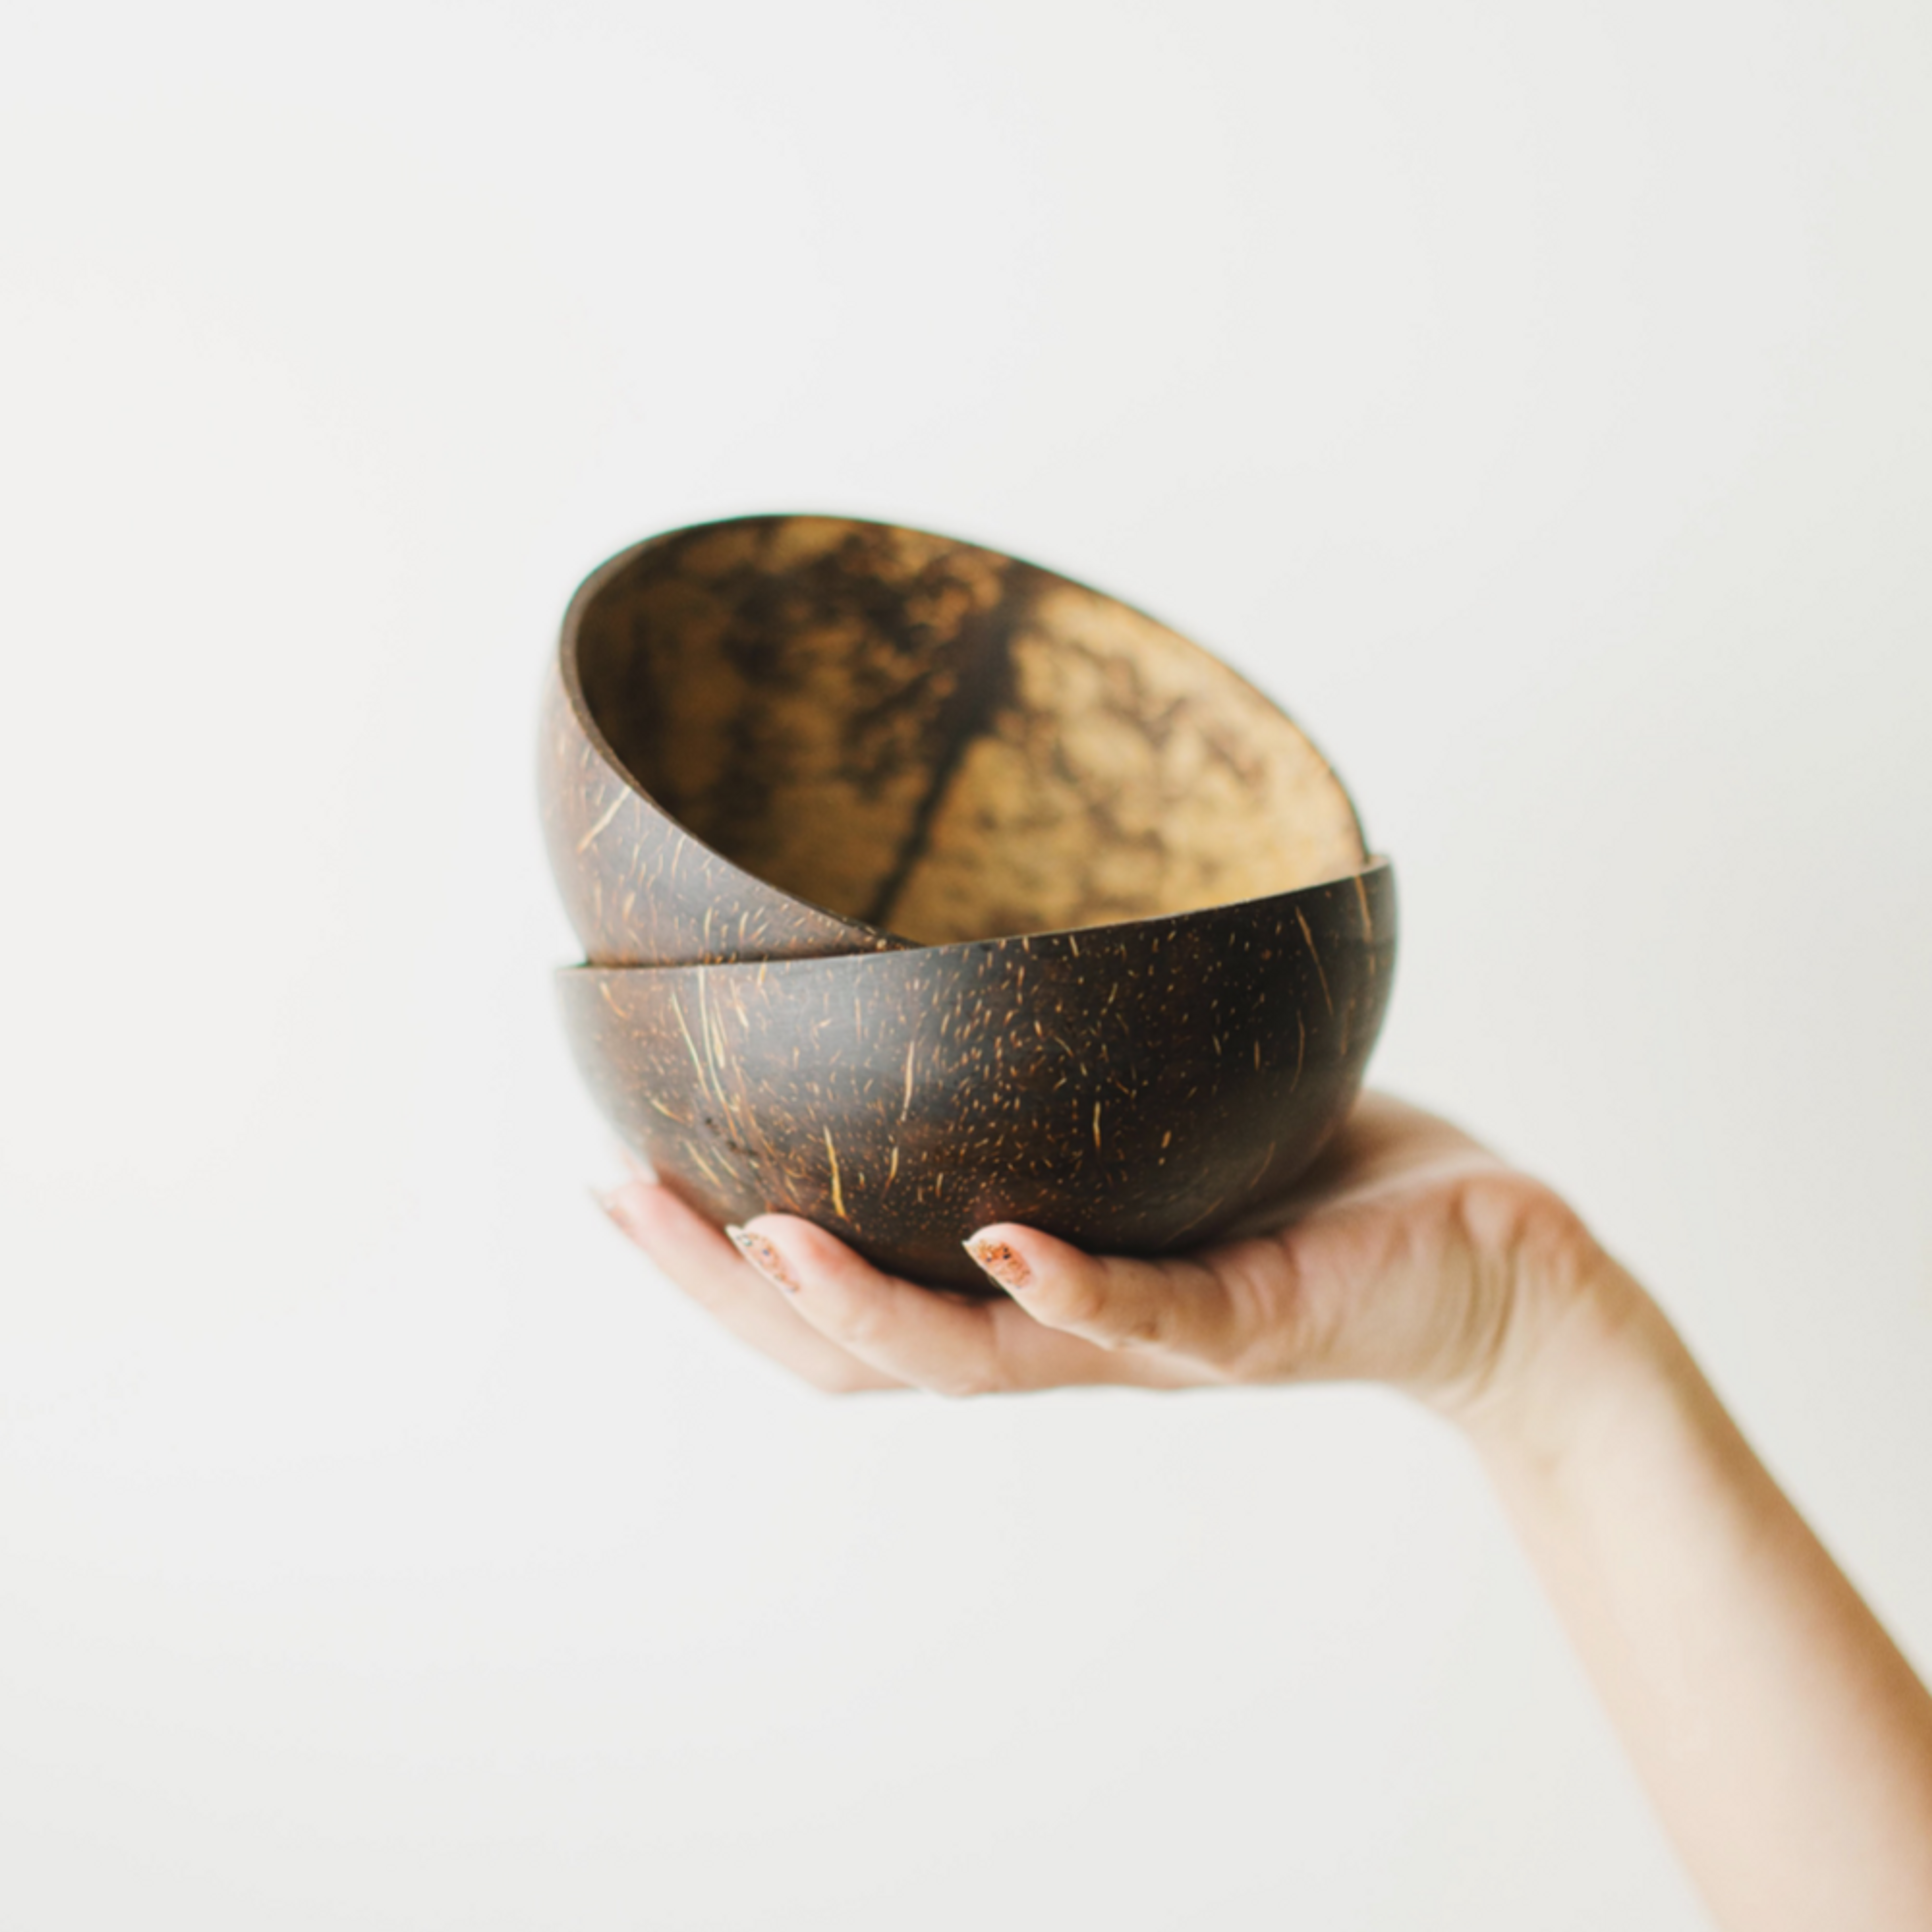 The Good Ol' Coconut Bowl